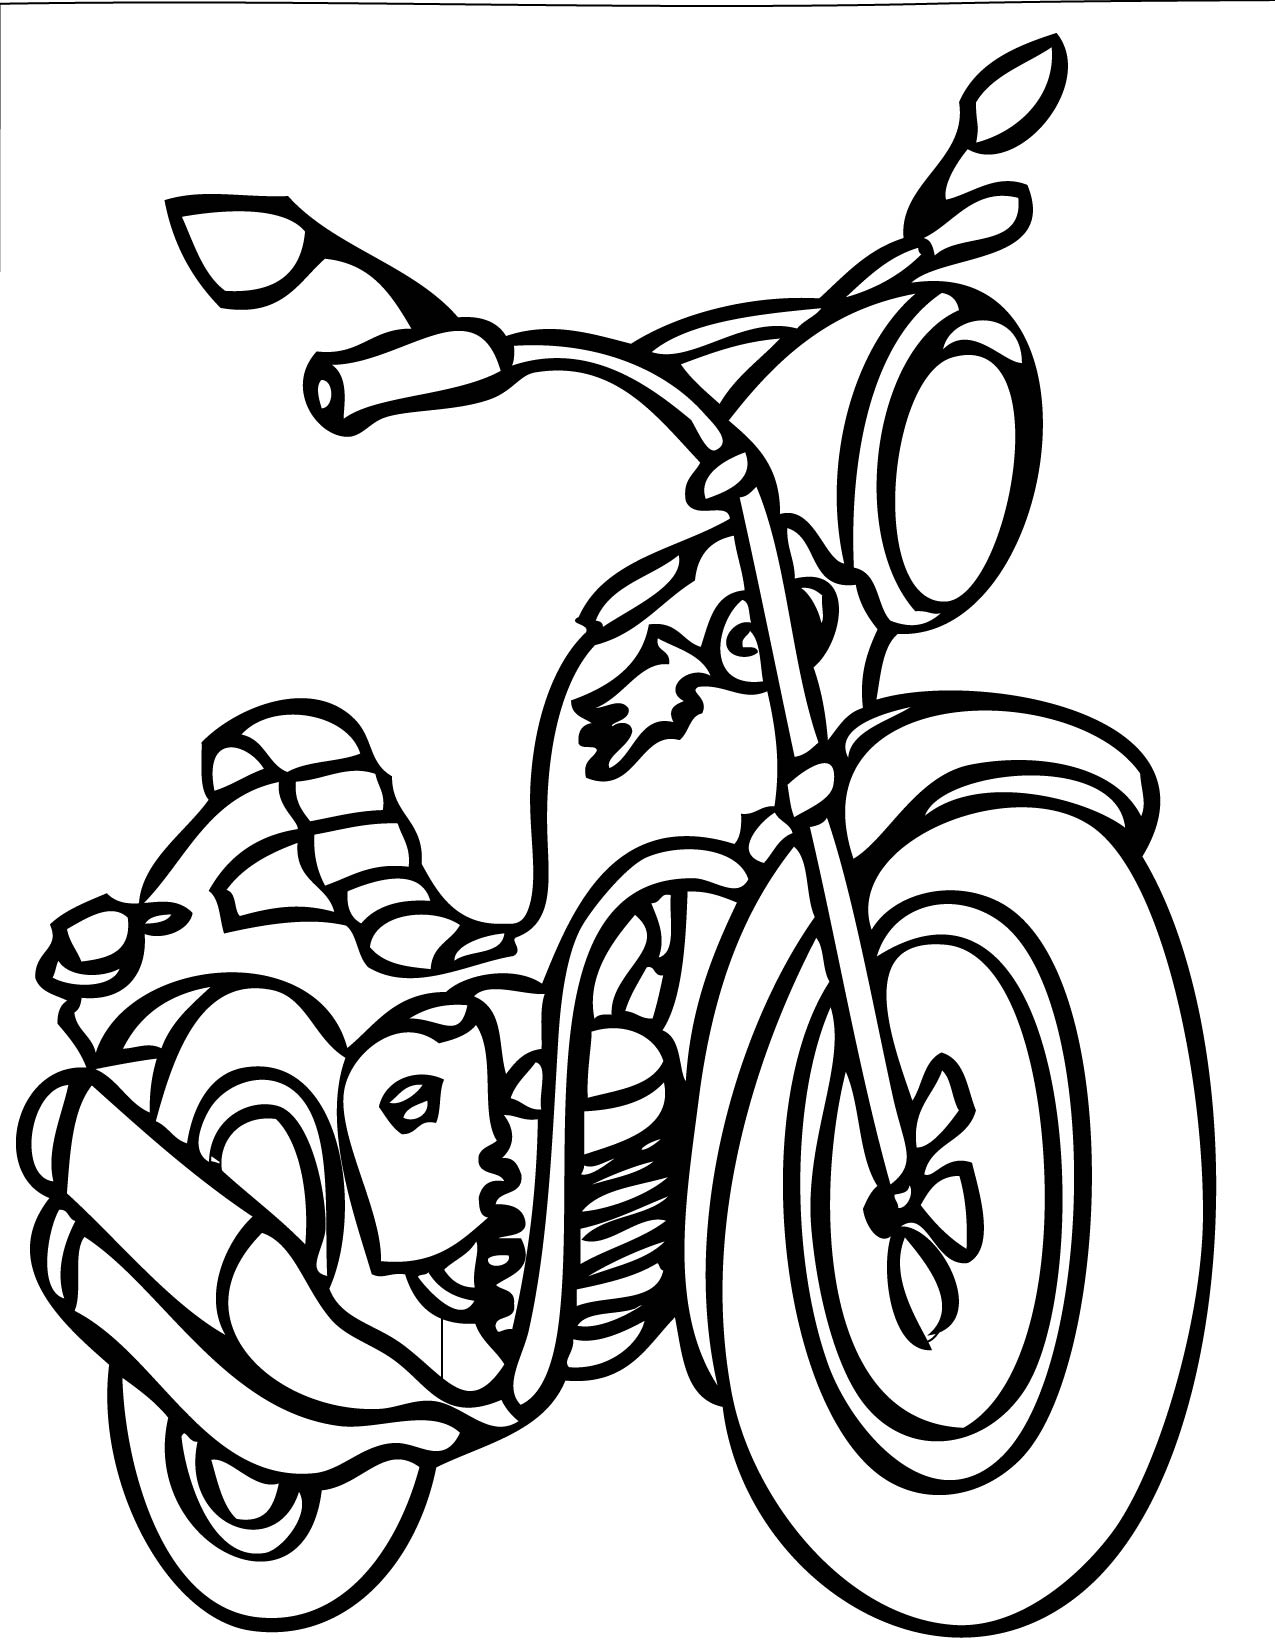 Motorcycle Drawing at GetDrawings | Free download